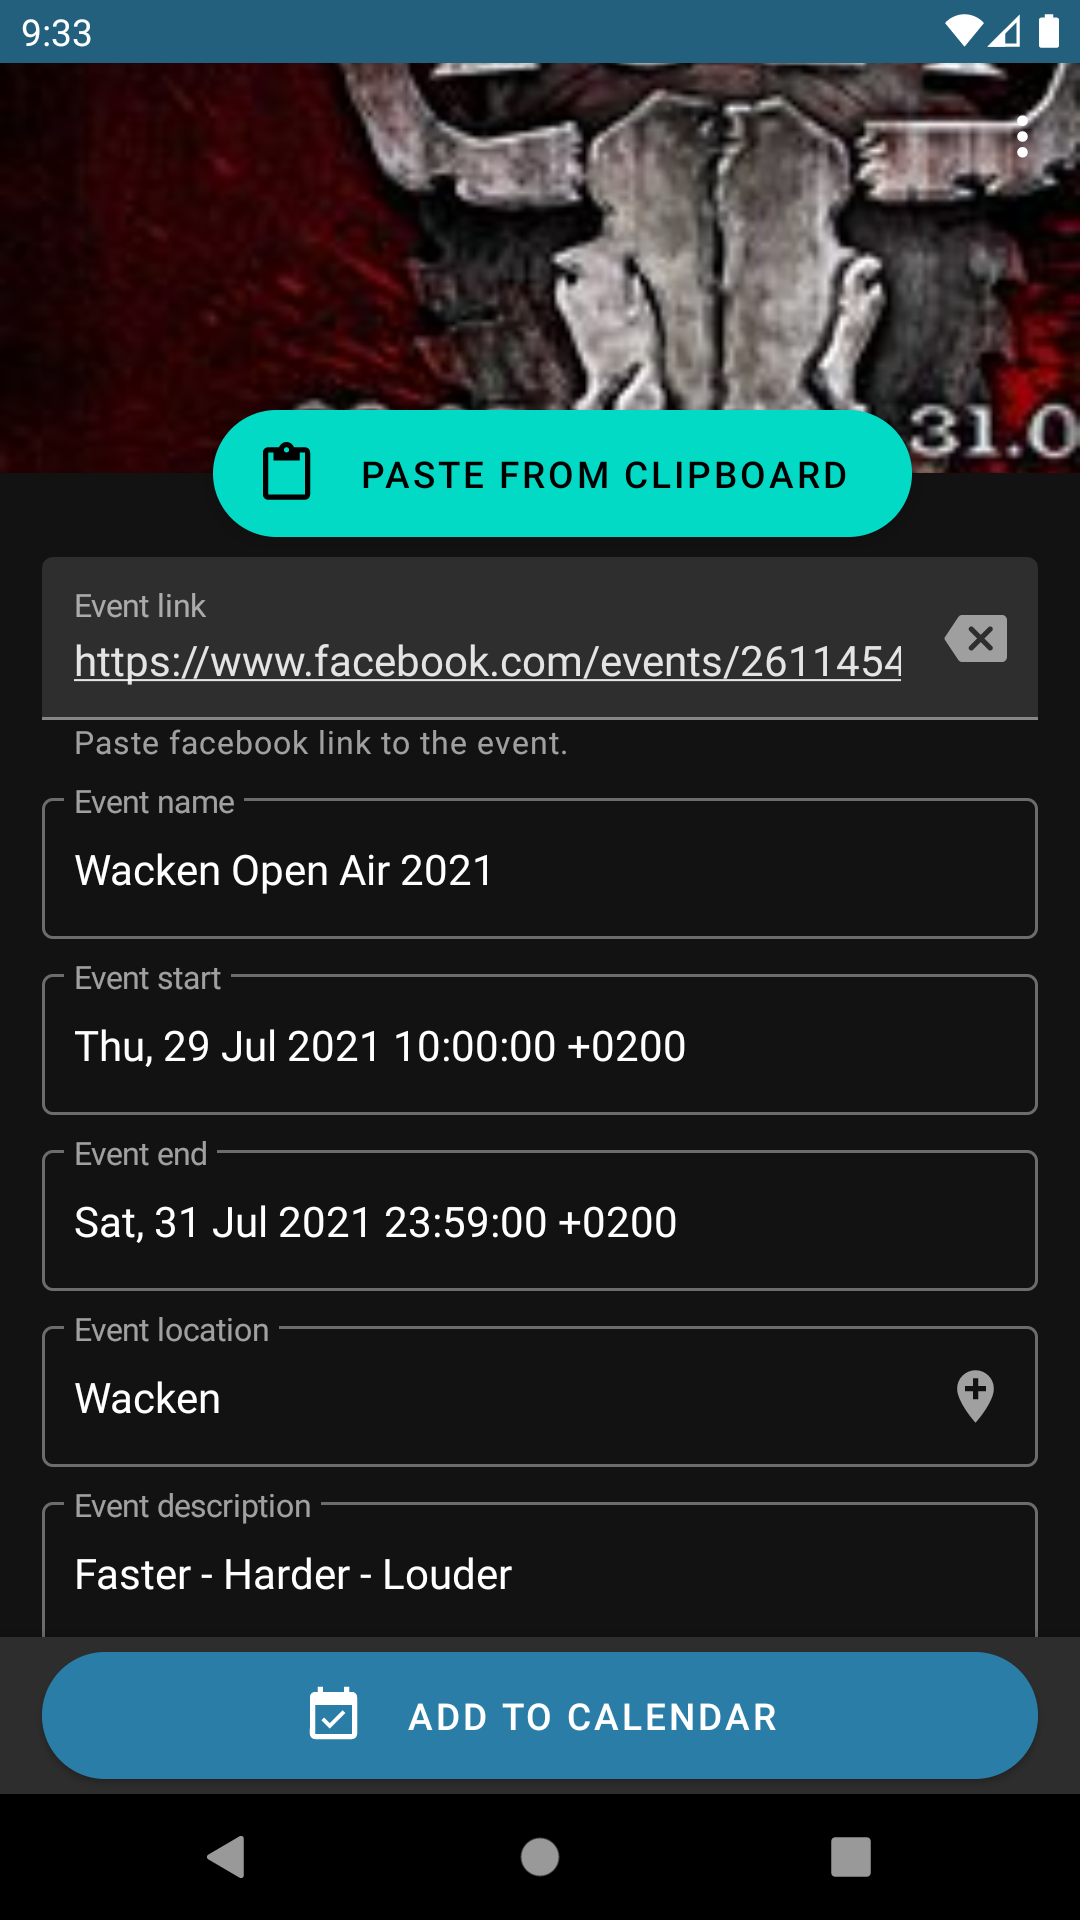 Screenshot of NoFb Event Scraper